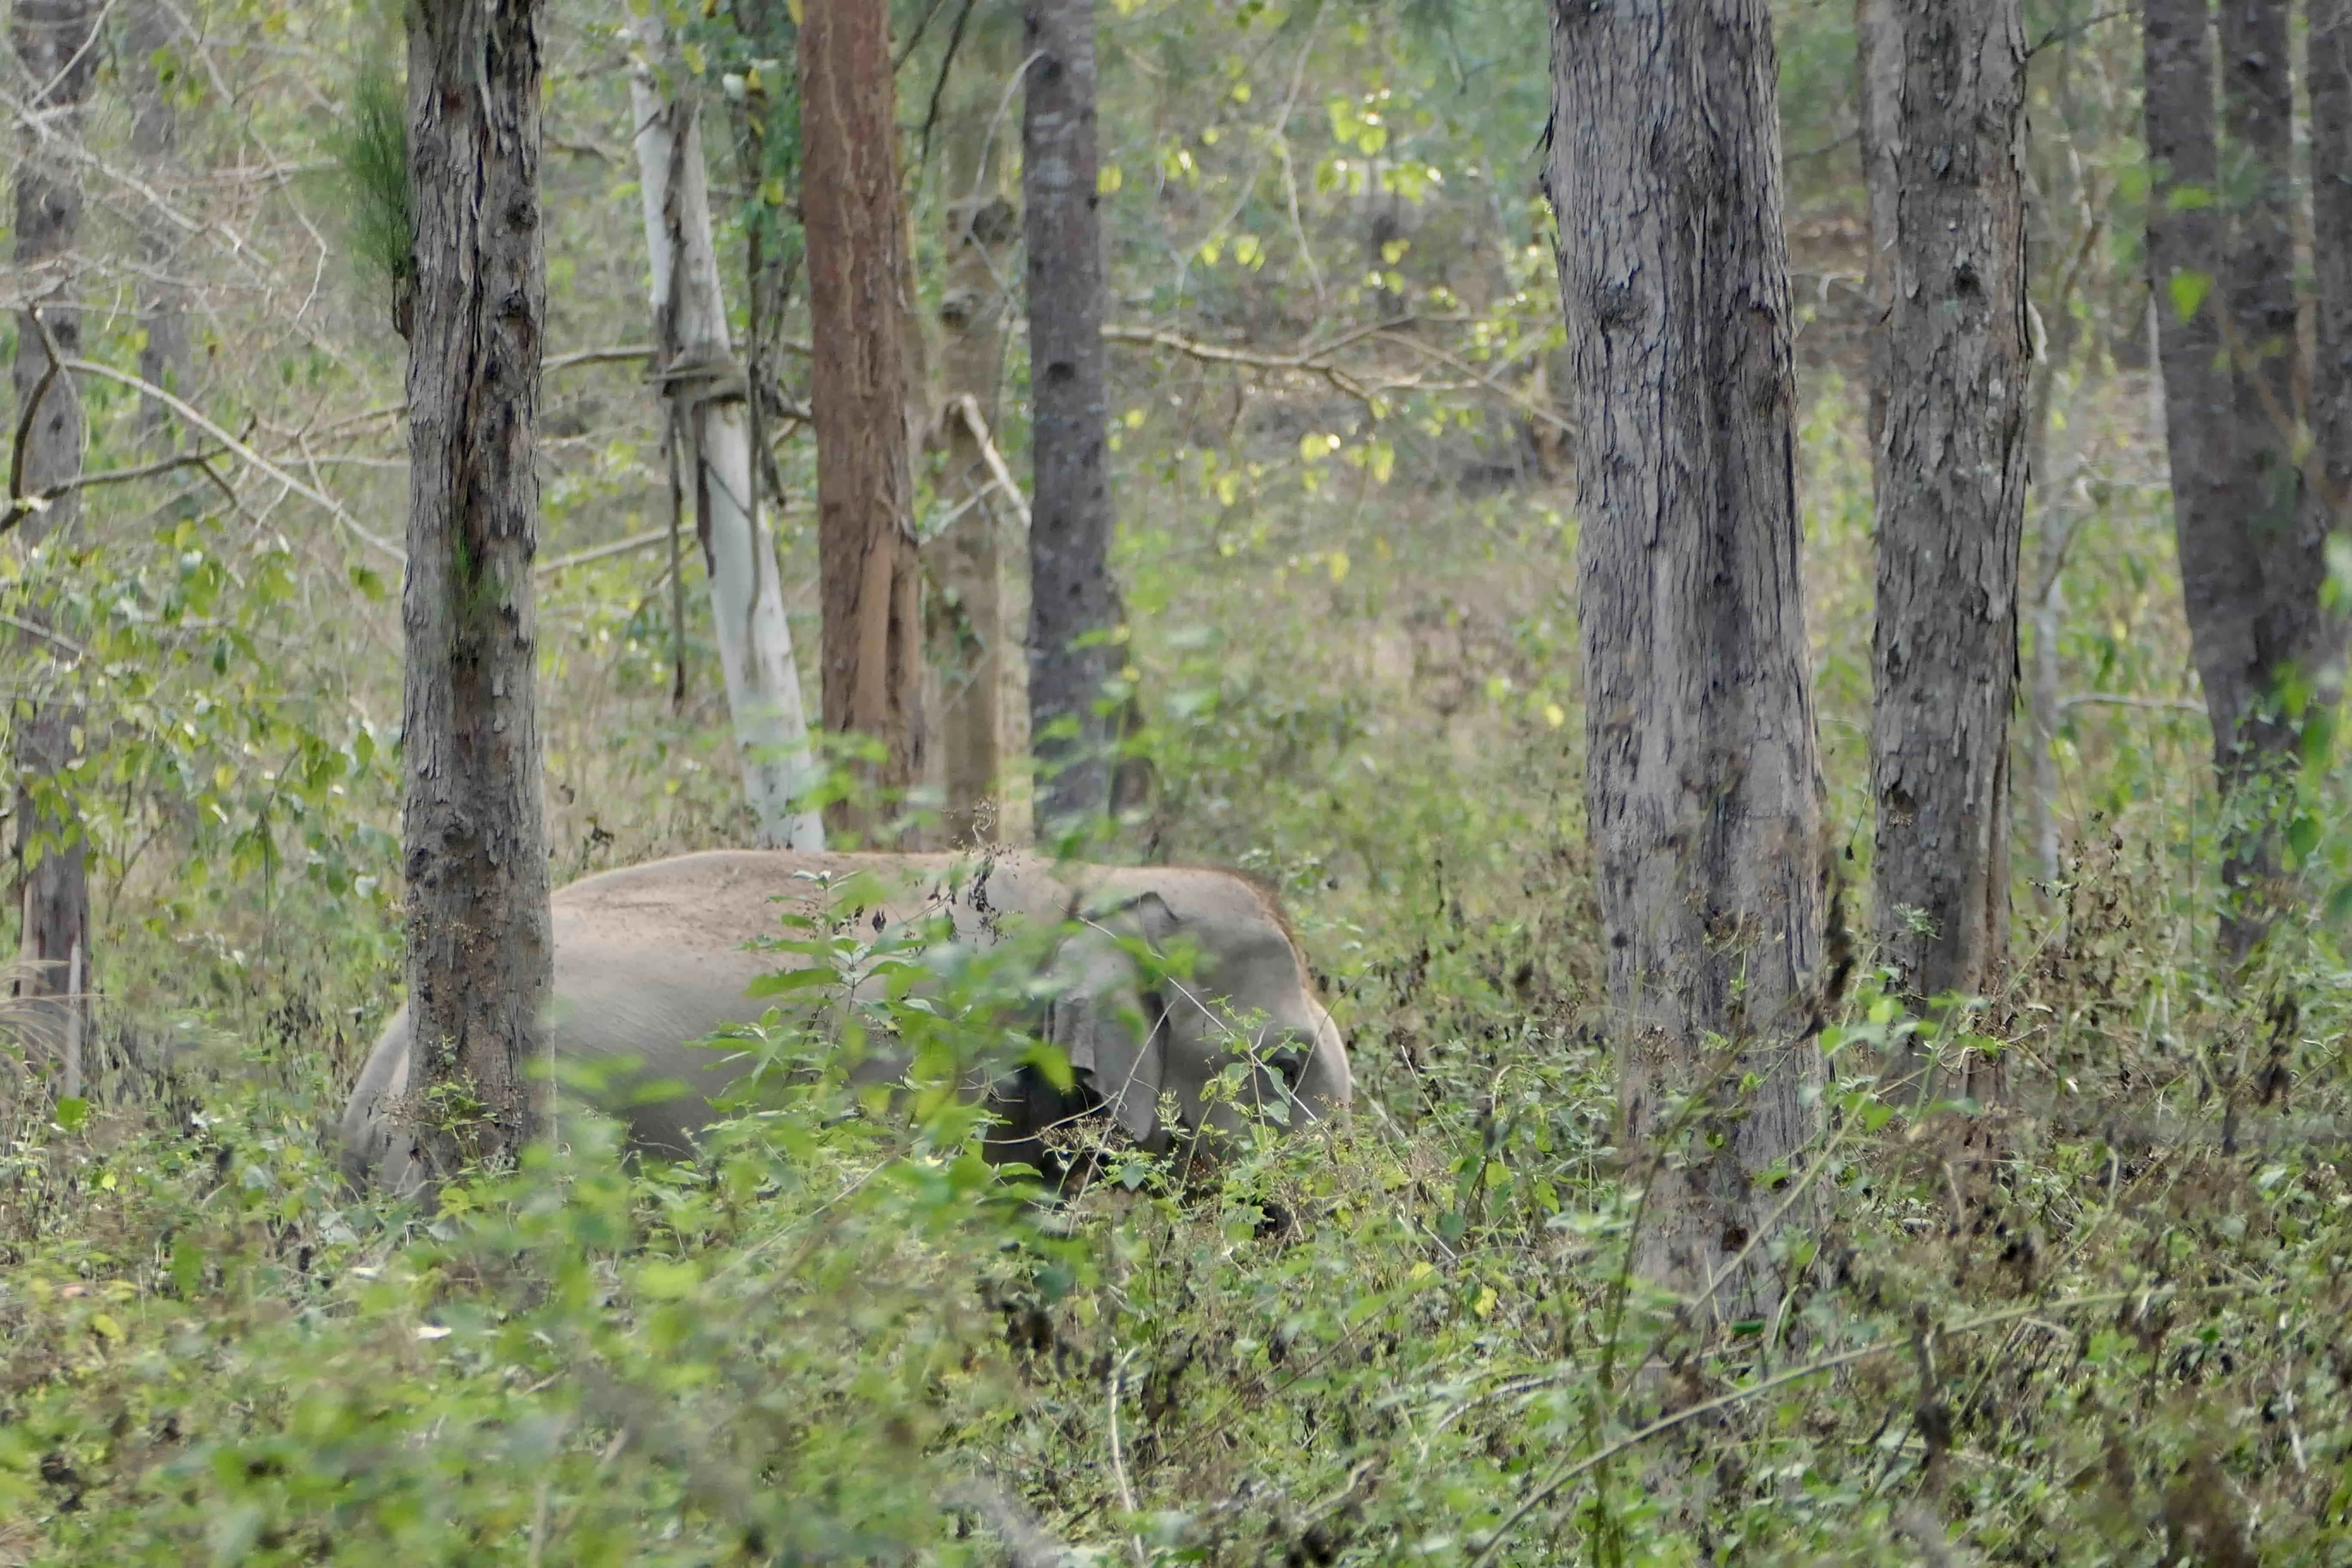 Elephant walking behind trees at a National Park